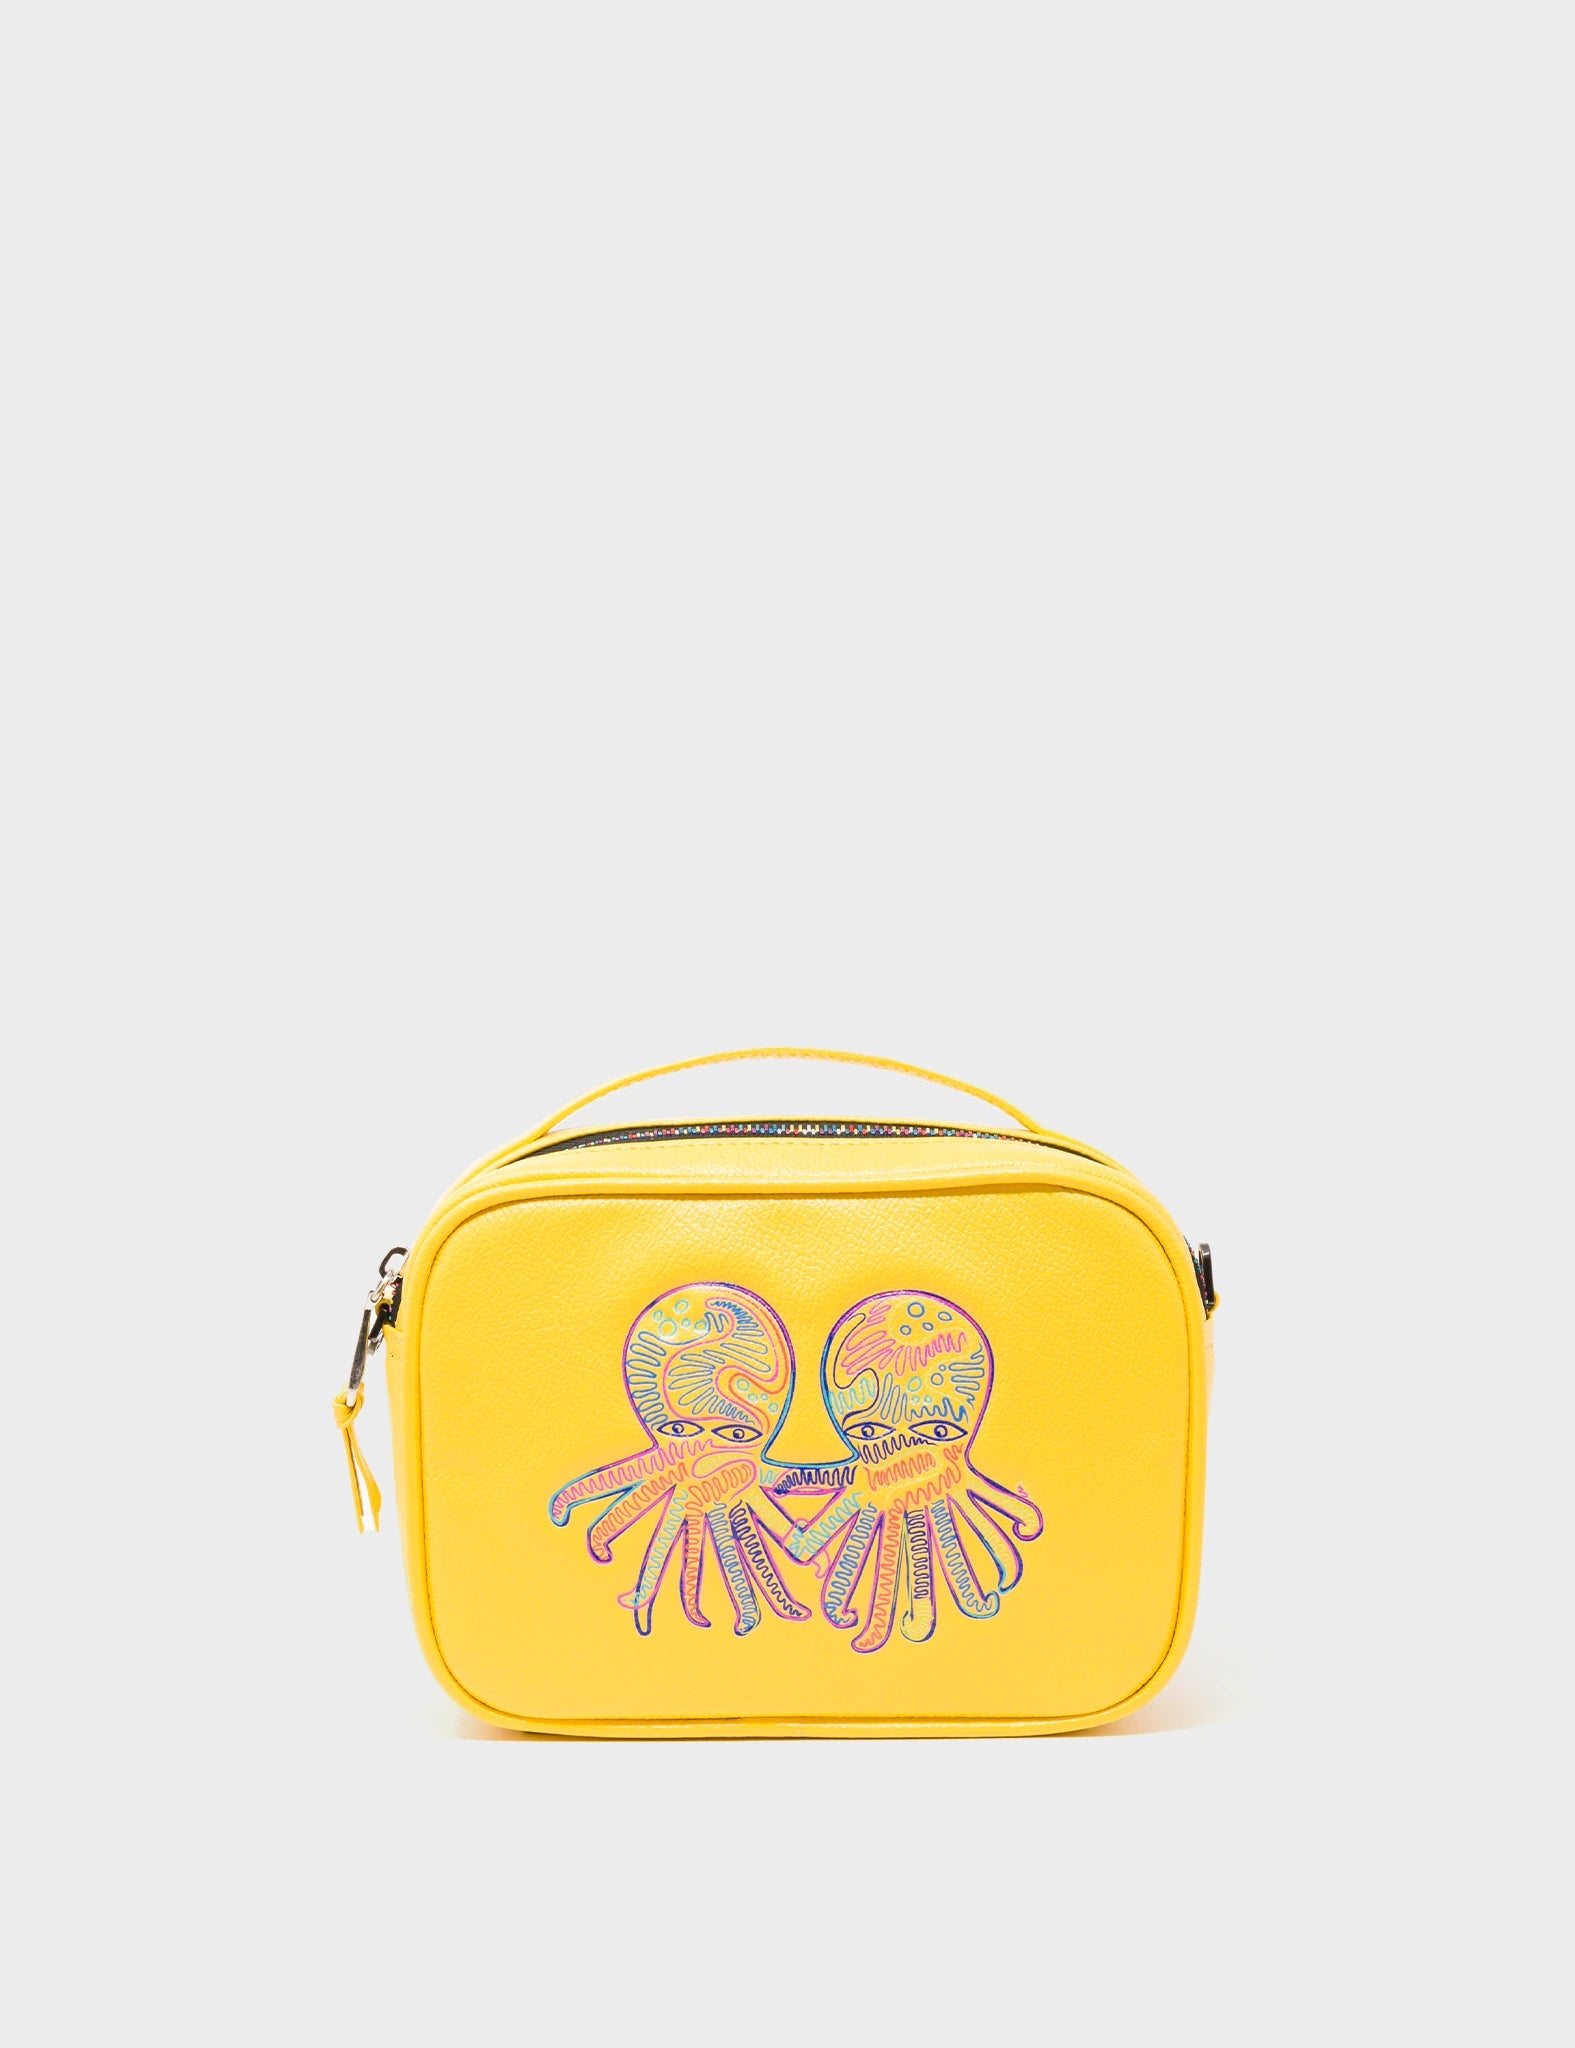 Yellow Leather Crossbody Handbag Colorful Octopus Design - Front